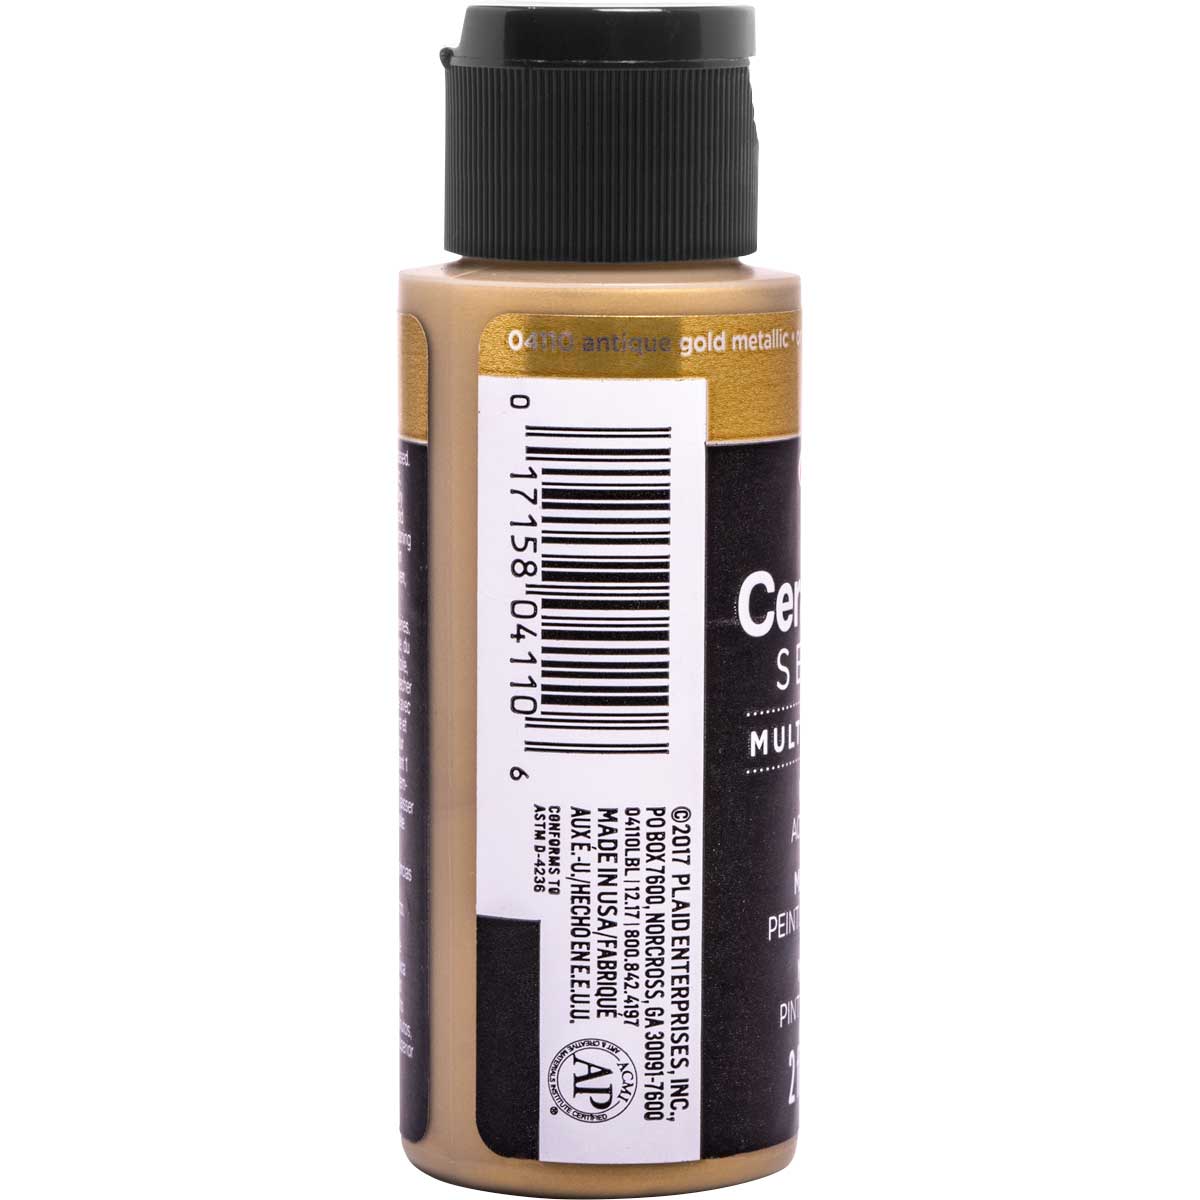 Delta Ceramcoat ® Select Multi-Surface Acrylic Paint - Metallic - Antique Gold, 2 oz. - 04110